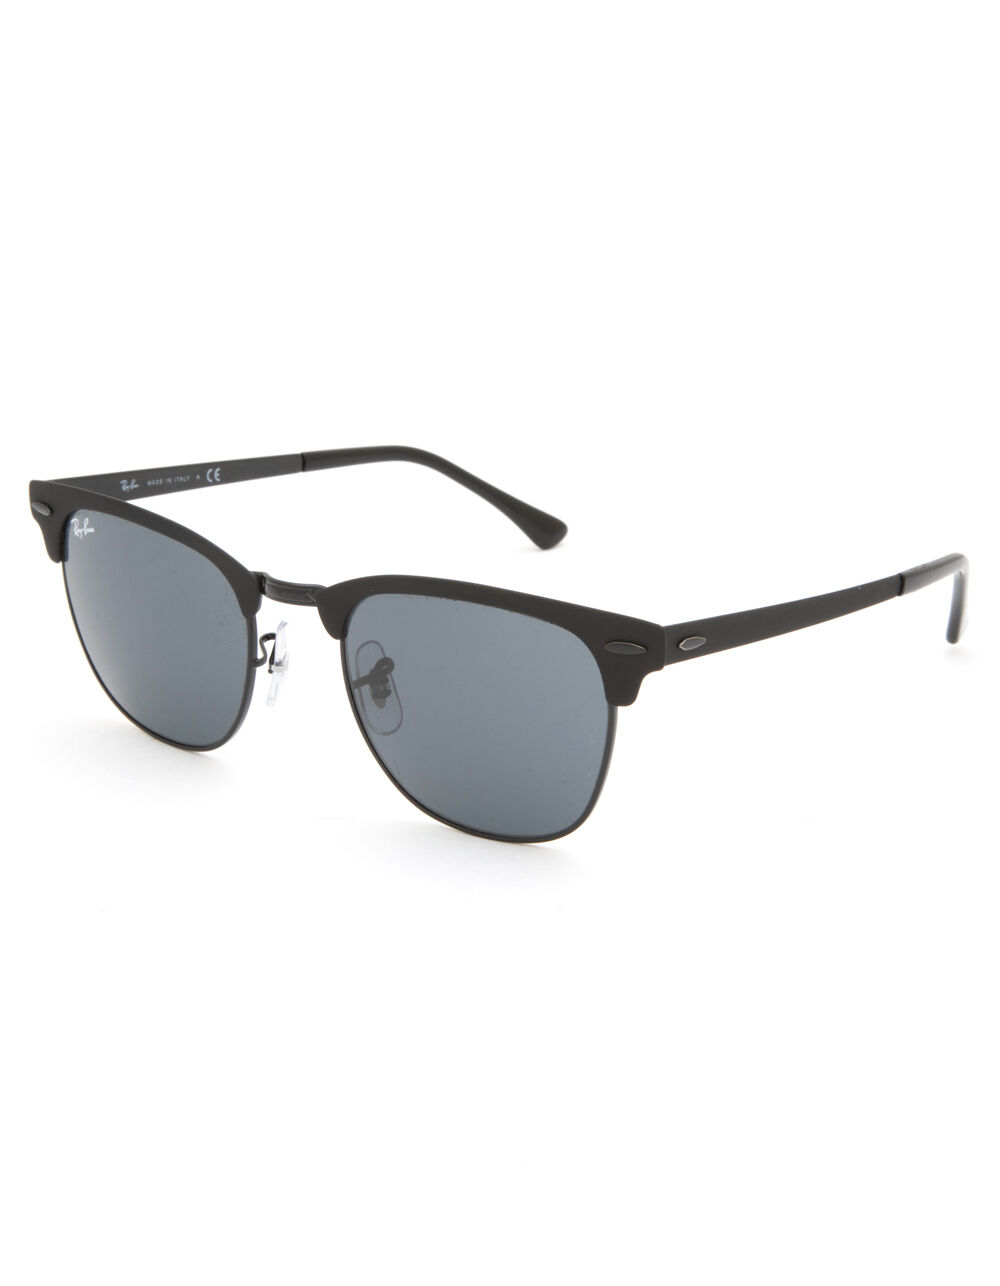 RAY-BAN Clubmaster Metal Black & Black Gradient Sunglasses